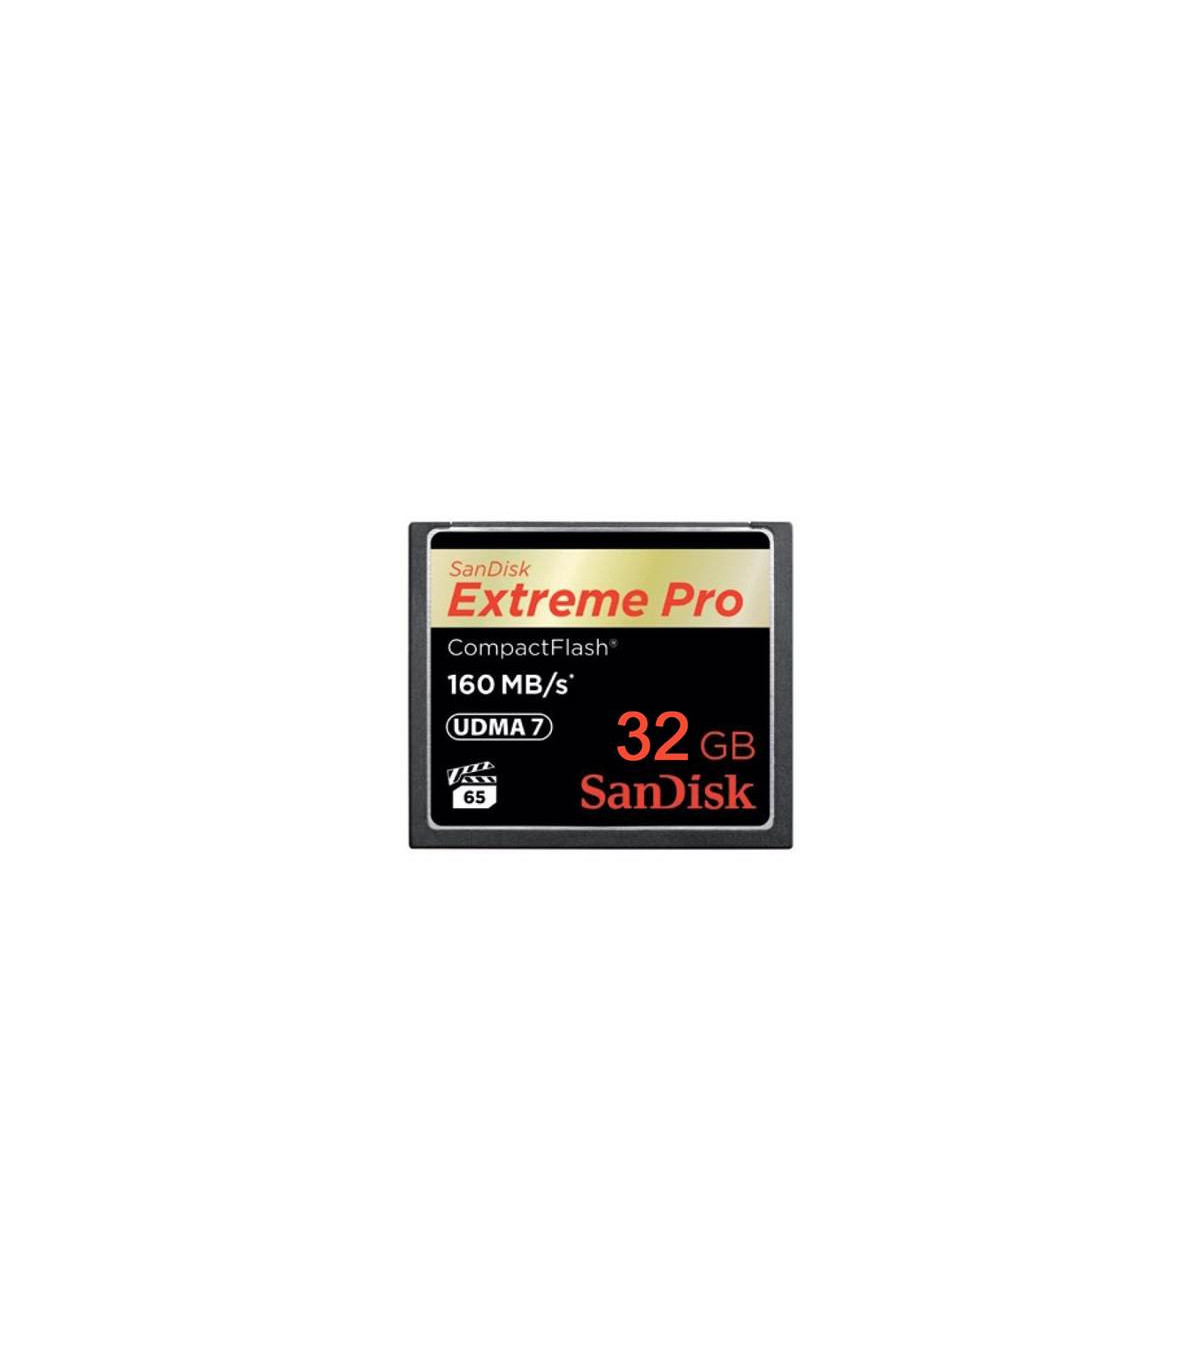 Carte SanDisk ExtremeMD PRO microSDXCMC UHS-I, la meilleure carte